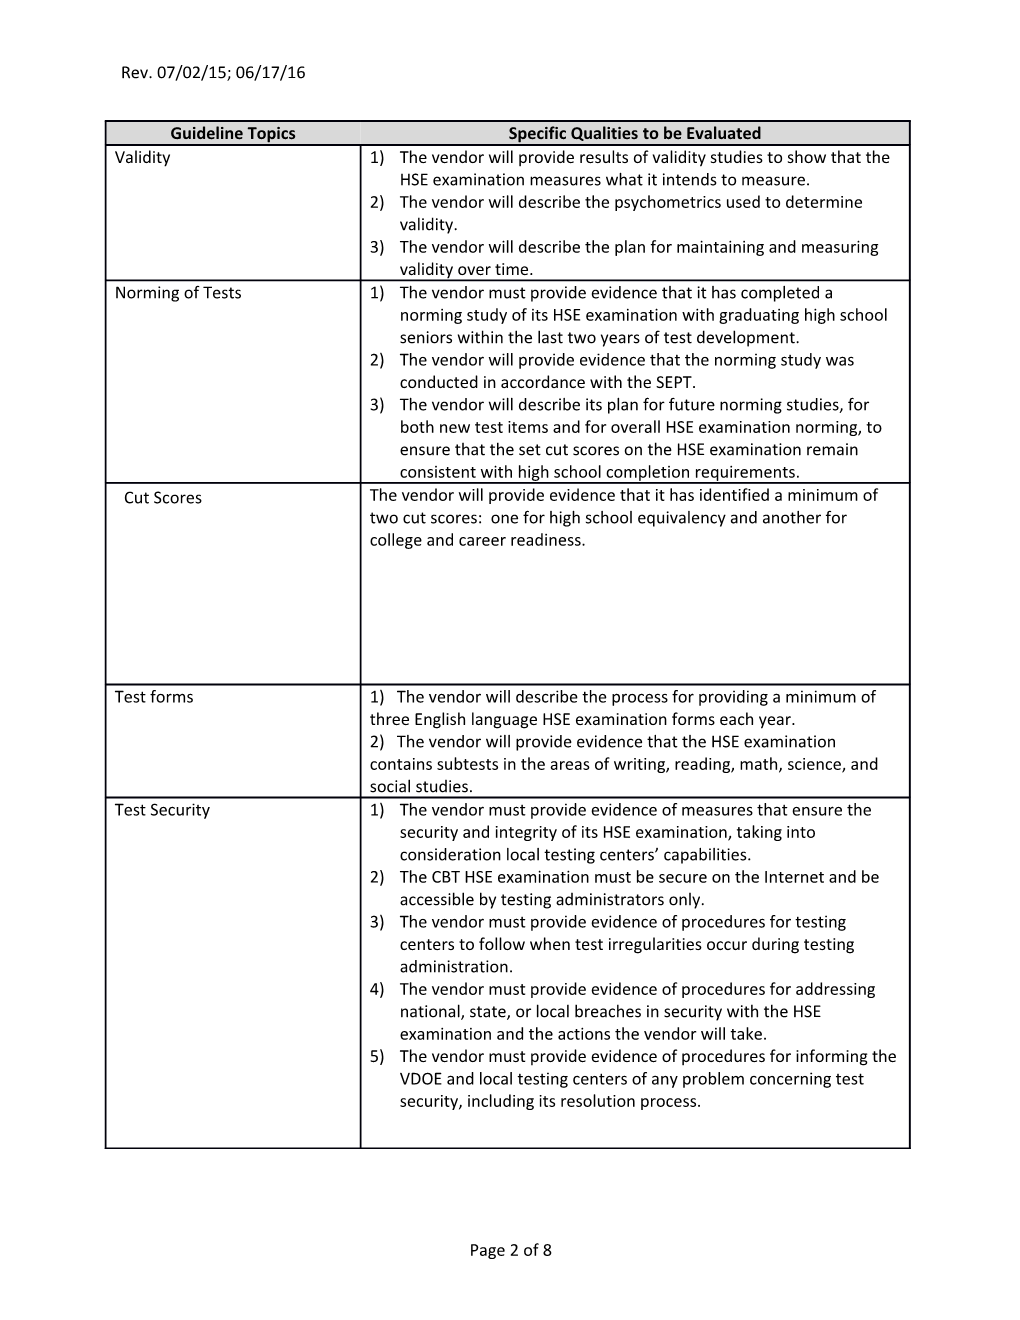 High School Equivalency Examination Guidelines for Virginia